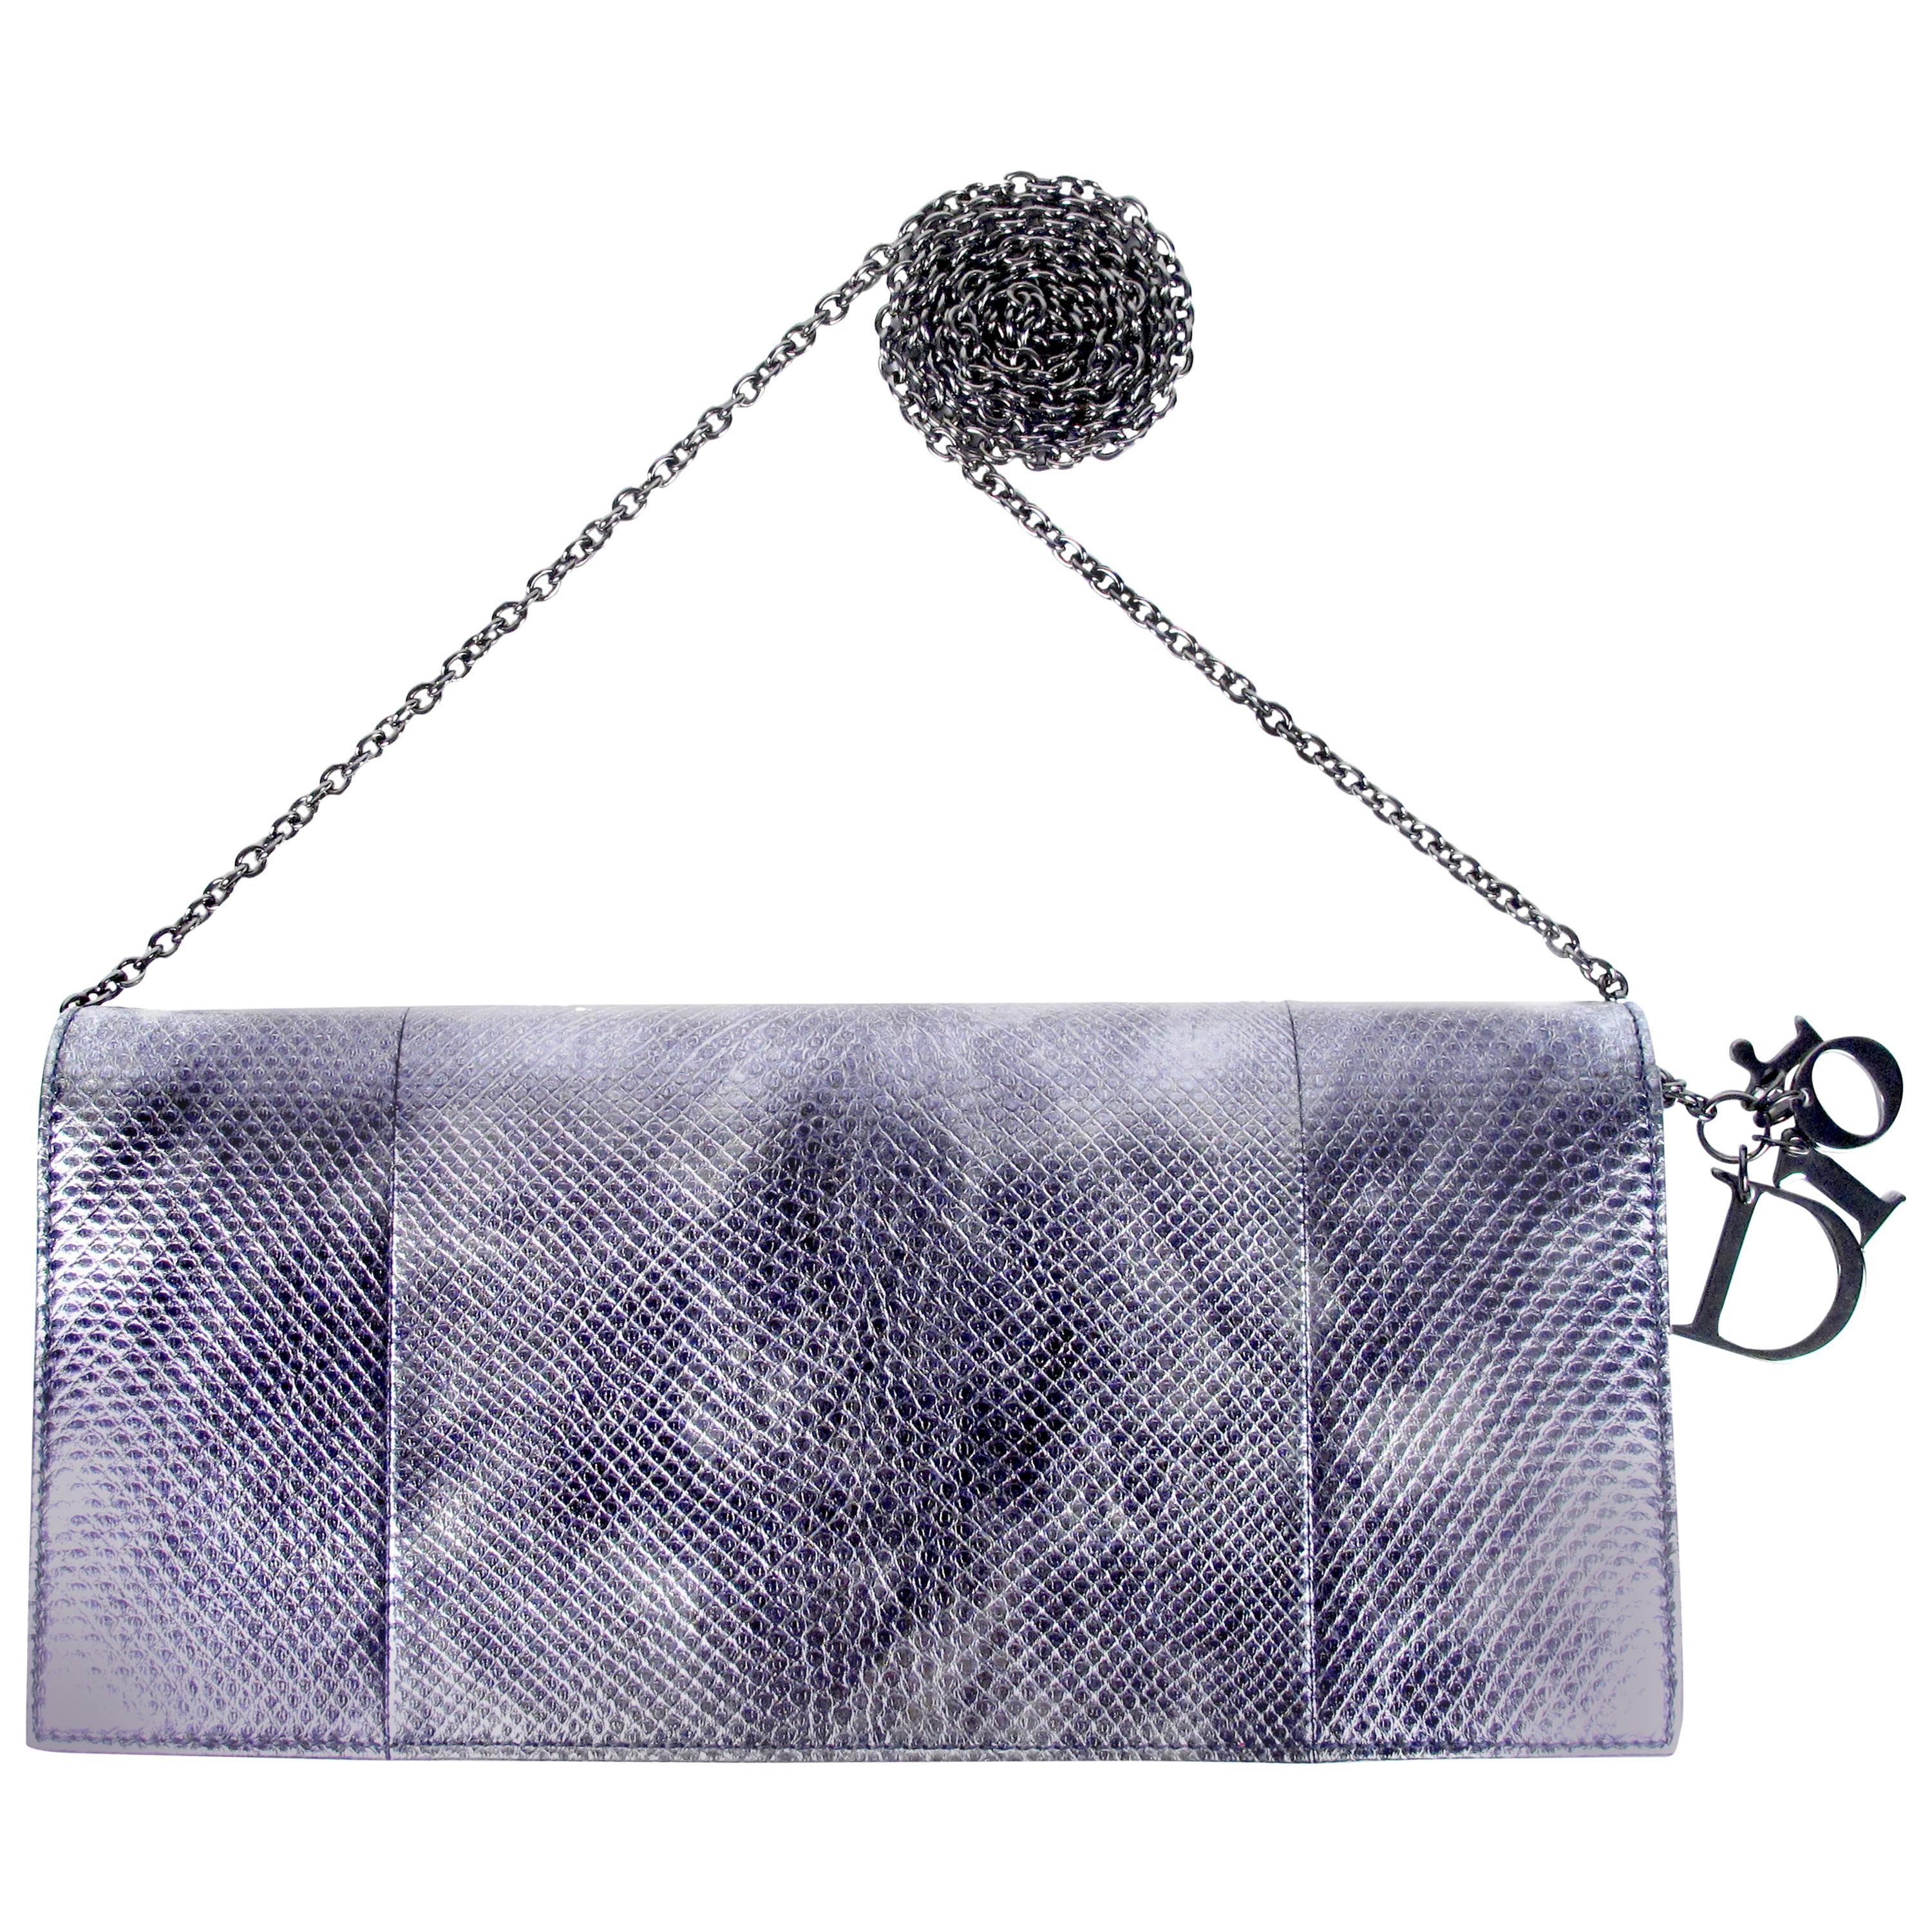 Dior Crossbody Bag - Silver Leather Embossed Snake Chain Charm Flap Handbag For Sale